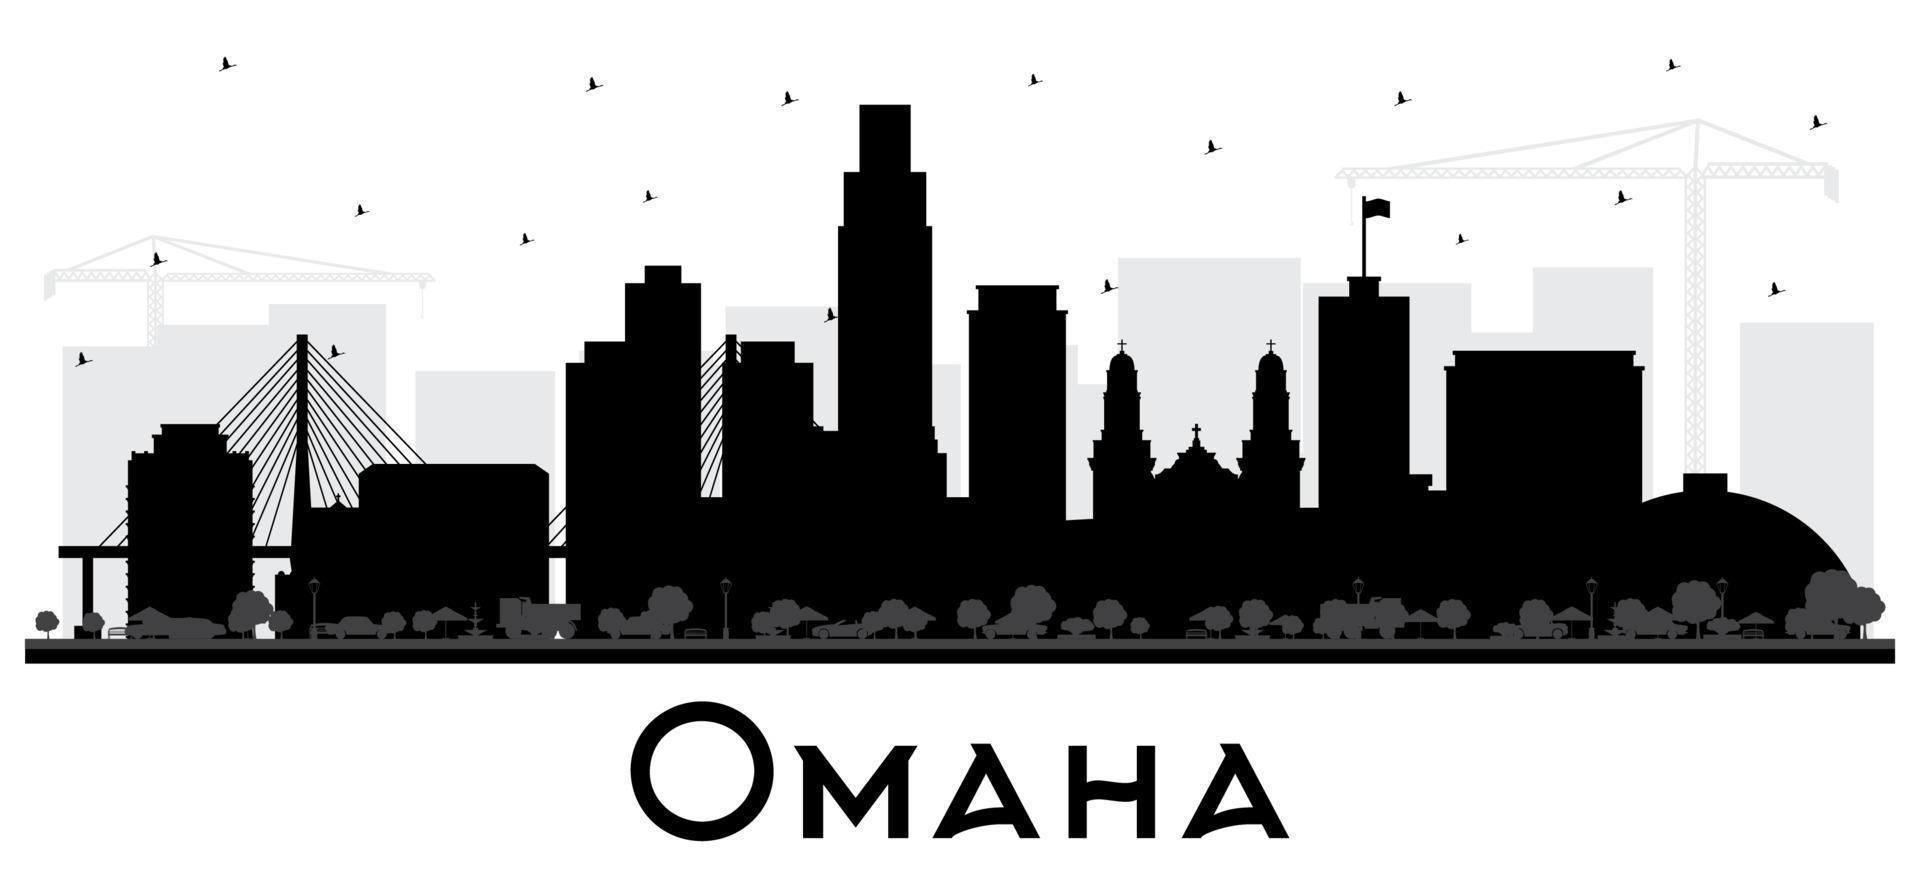 Omaha Nebraska City Skyline Silhouette with Black Buildings Isolated on White. vector